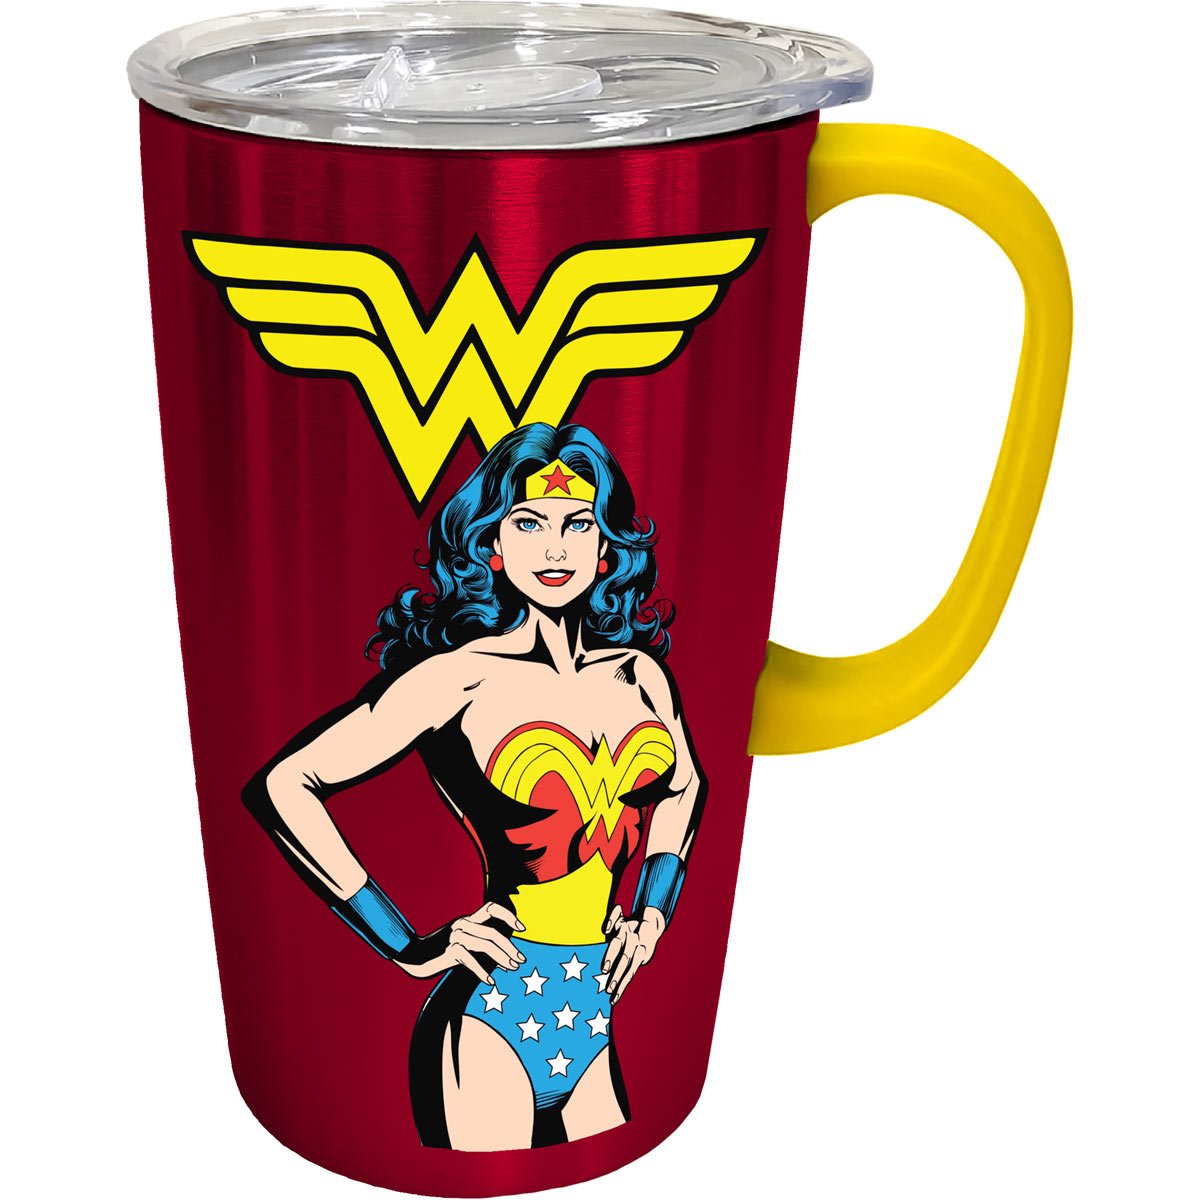 Wonder Woman 18 oz. Stainless Steel Water Bottle